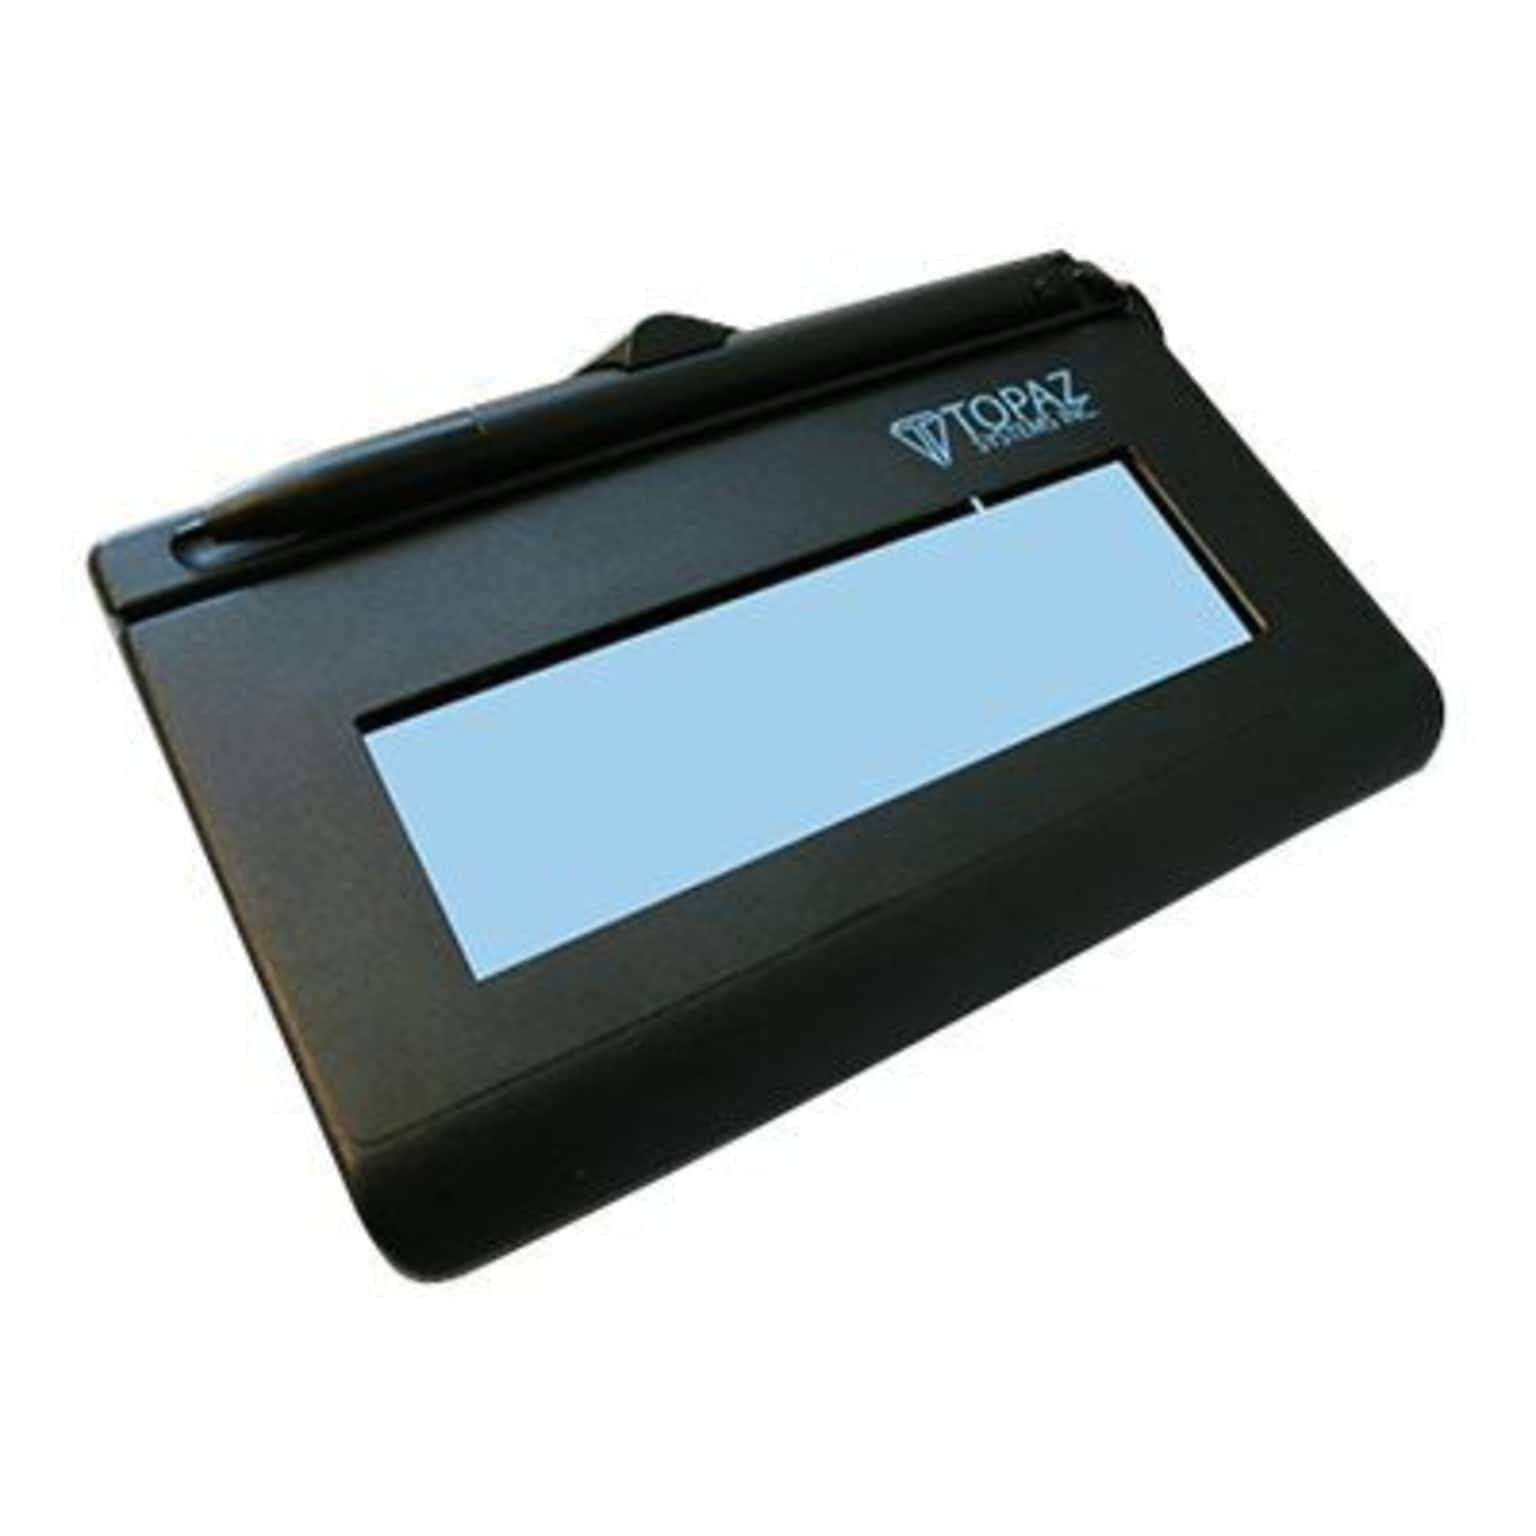 Topaz® SigLite® LCD 1X5 Virtual Serial via USB Backlit Signature Pad With Stylus; Black, 4.4 x 1.3